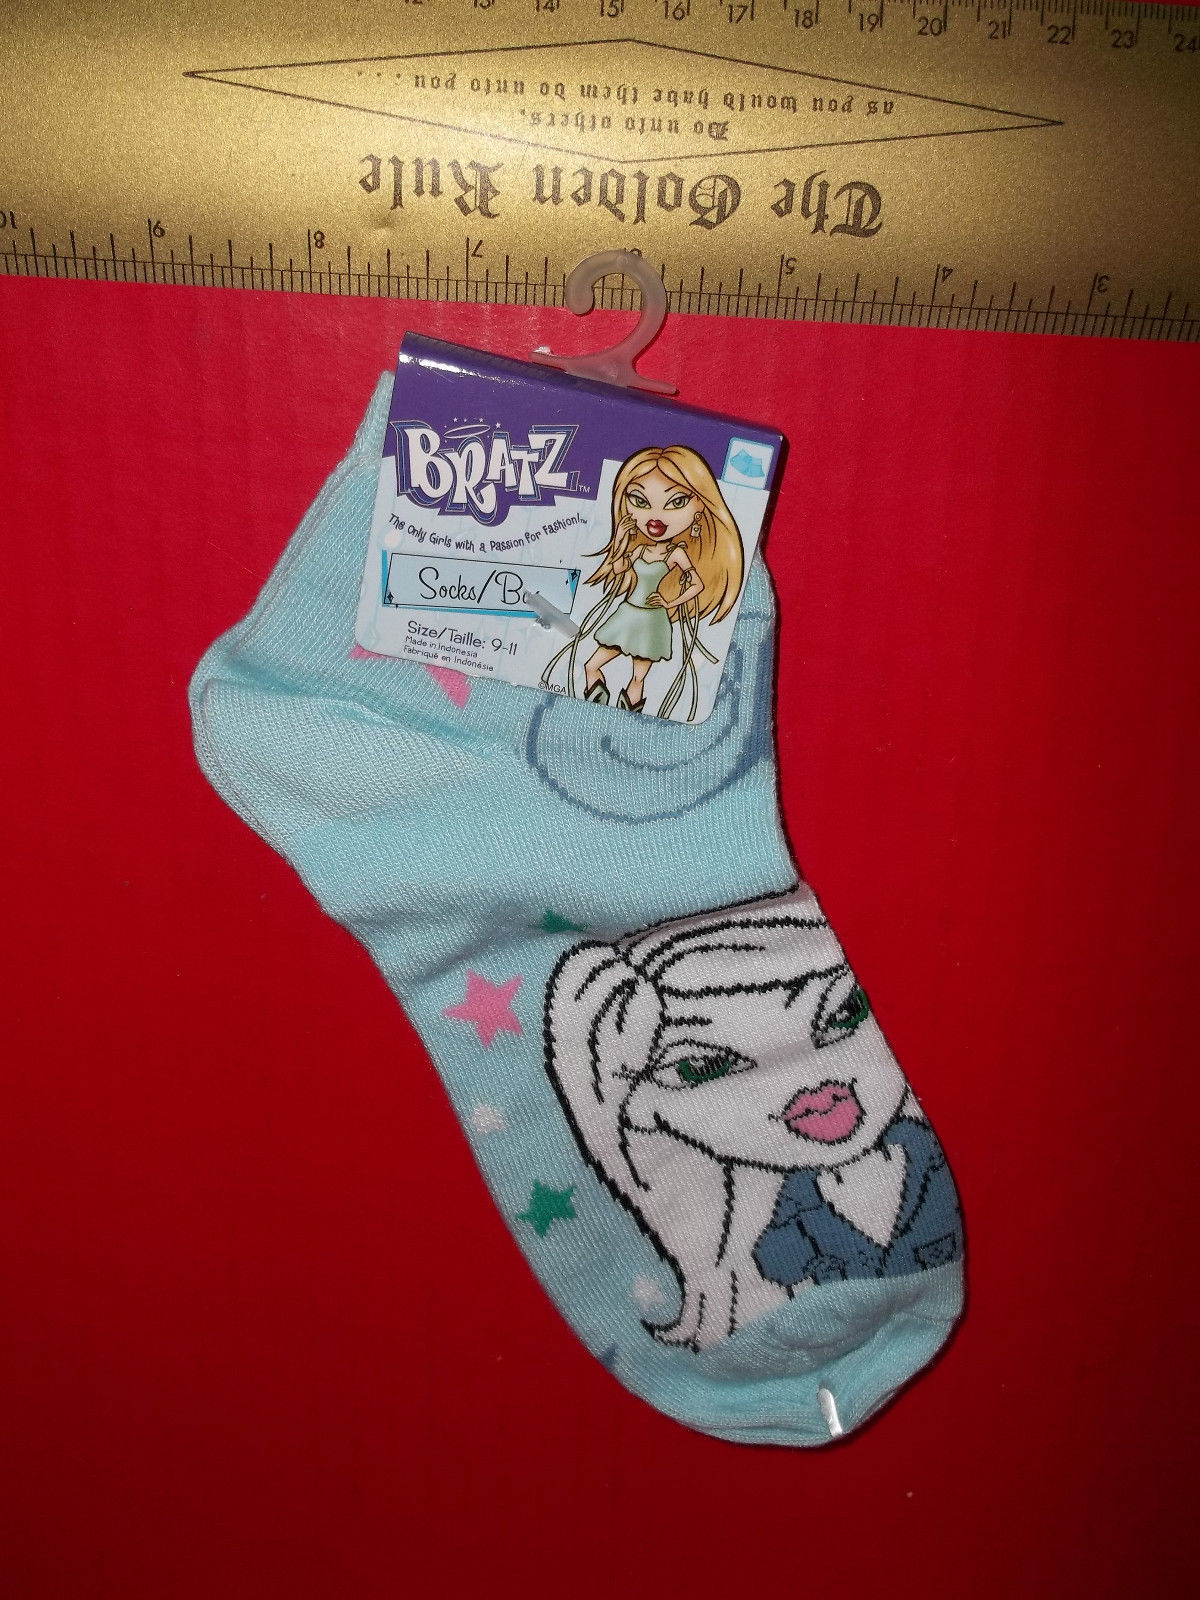 Bratz socks 2 pair girl's size 6-8.5 